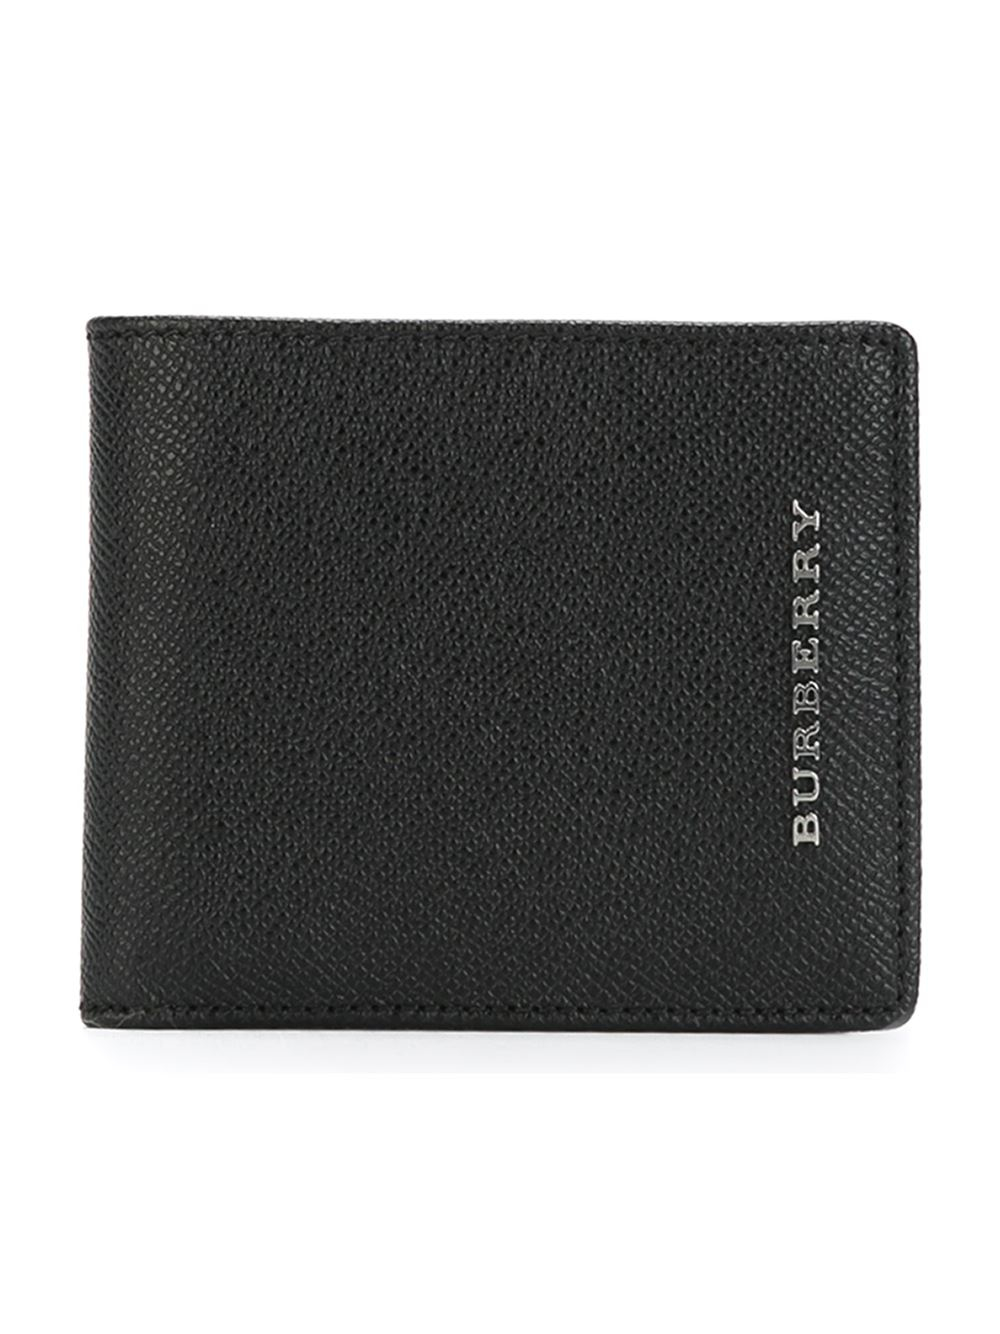 Burberry Logo Plaque Wallet in Black for Men | Lyst